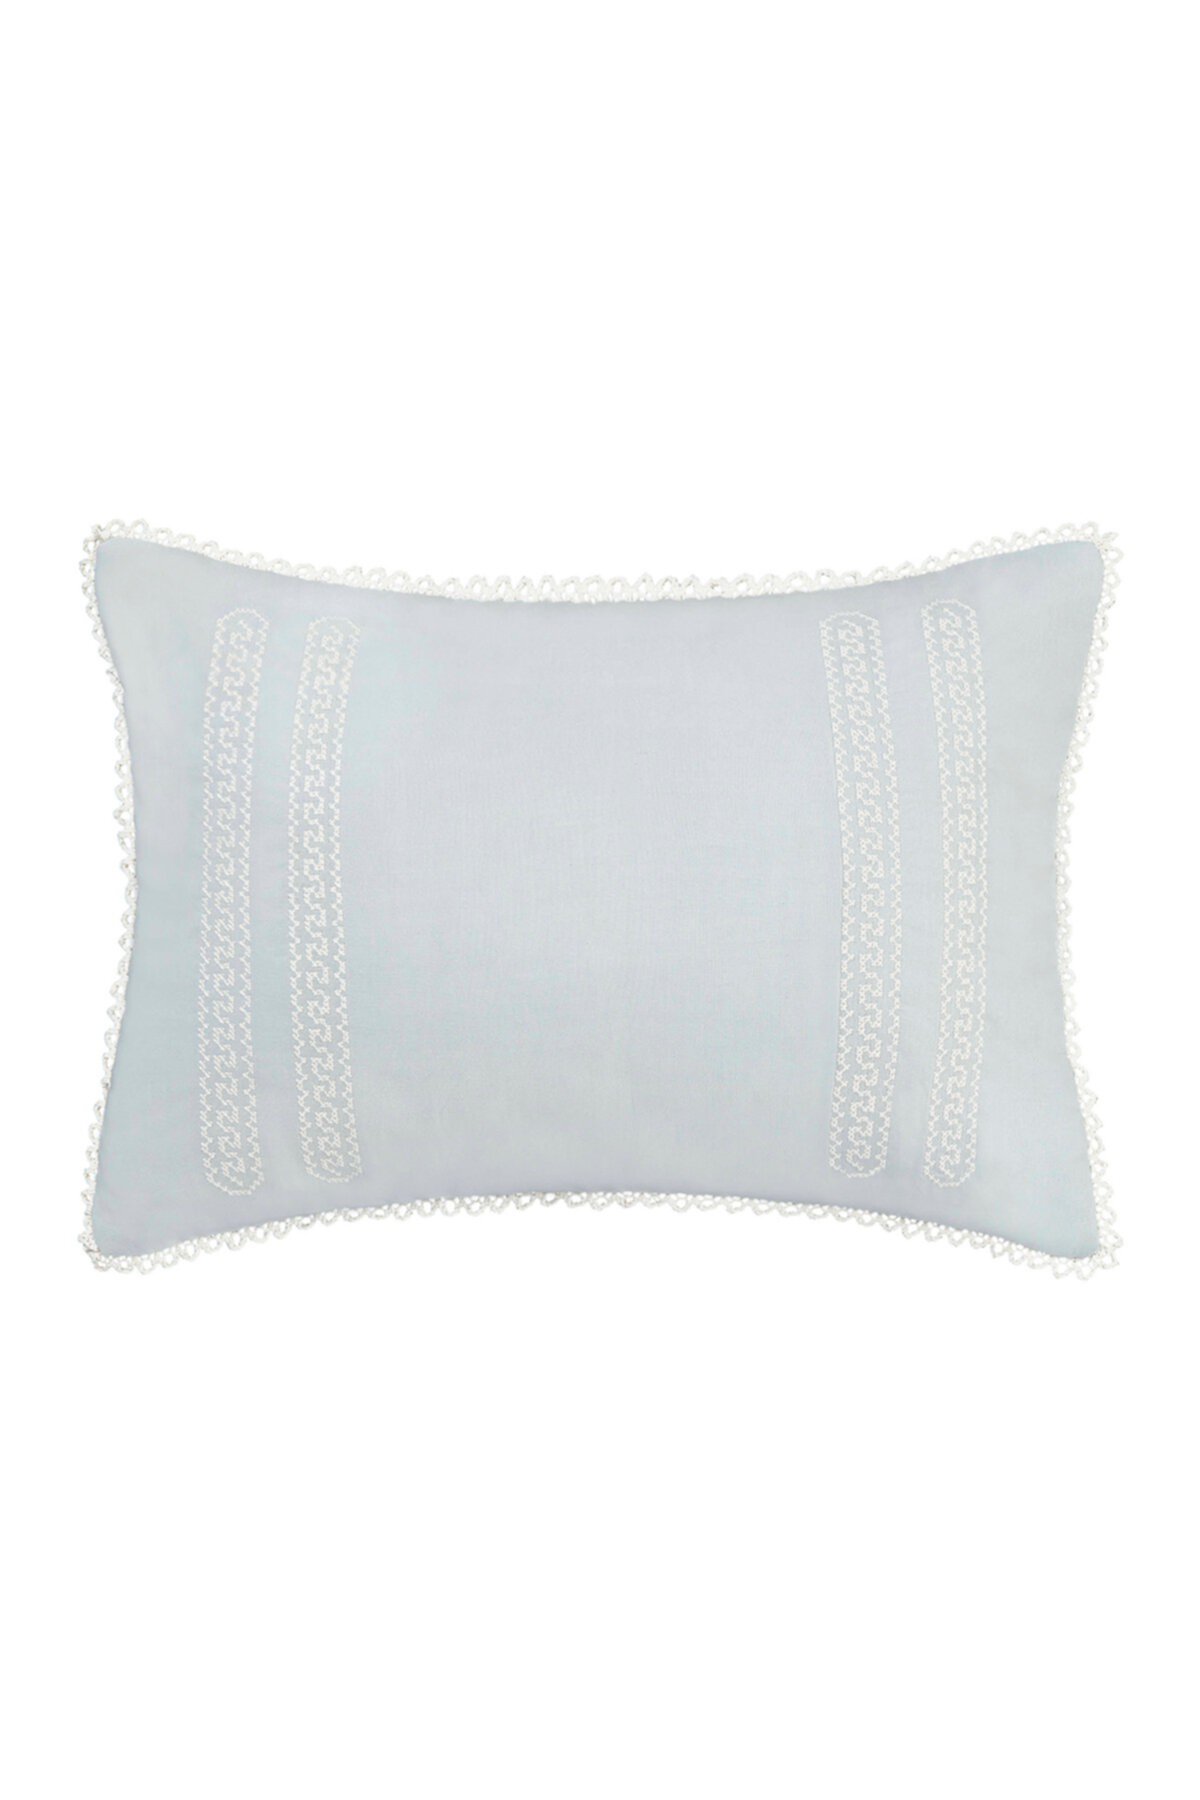 Chloe Pastel Blue 12" X 16" Decorative Pillow Laura Ashley